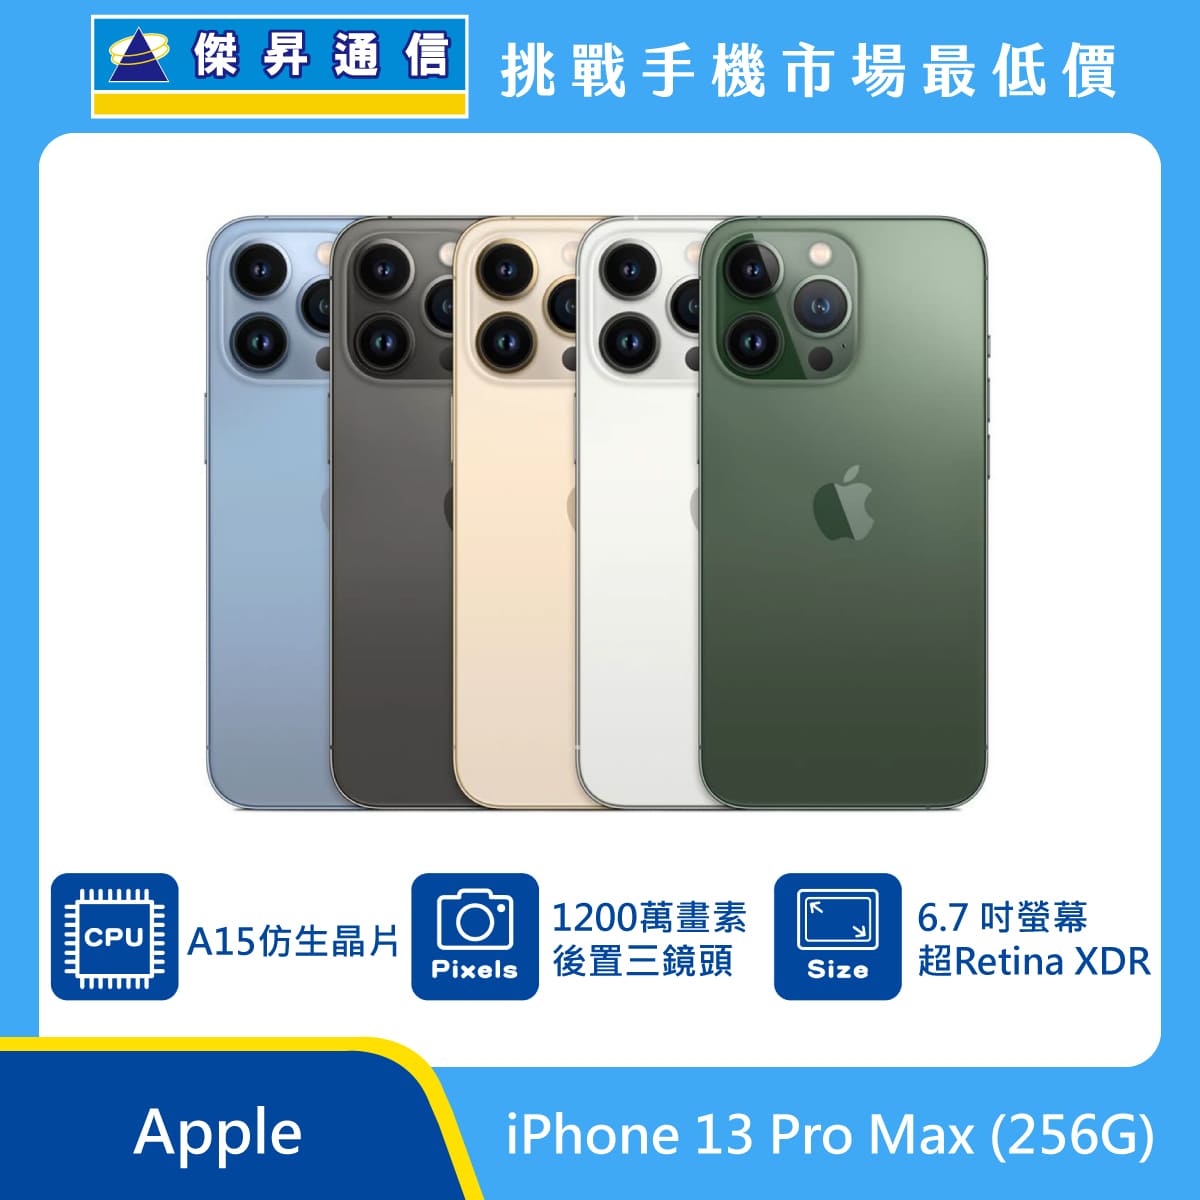 Apple iPhone 13 Pro Max (256G)